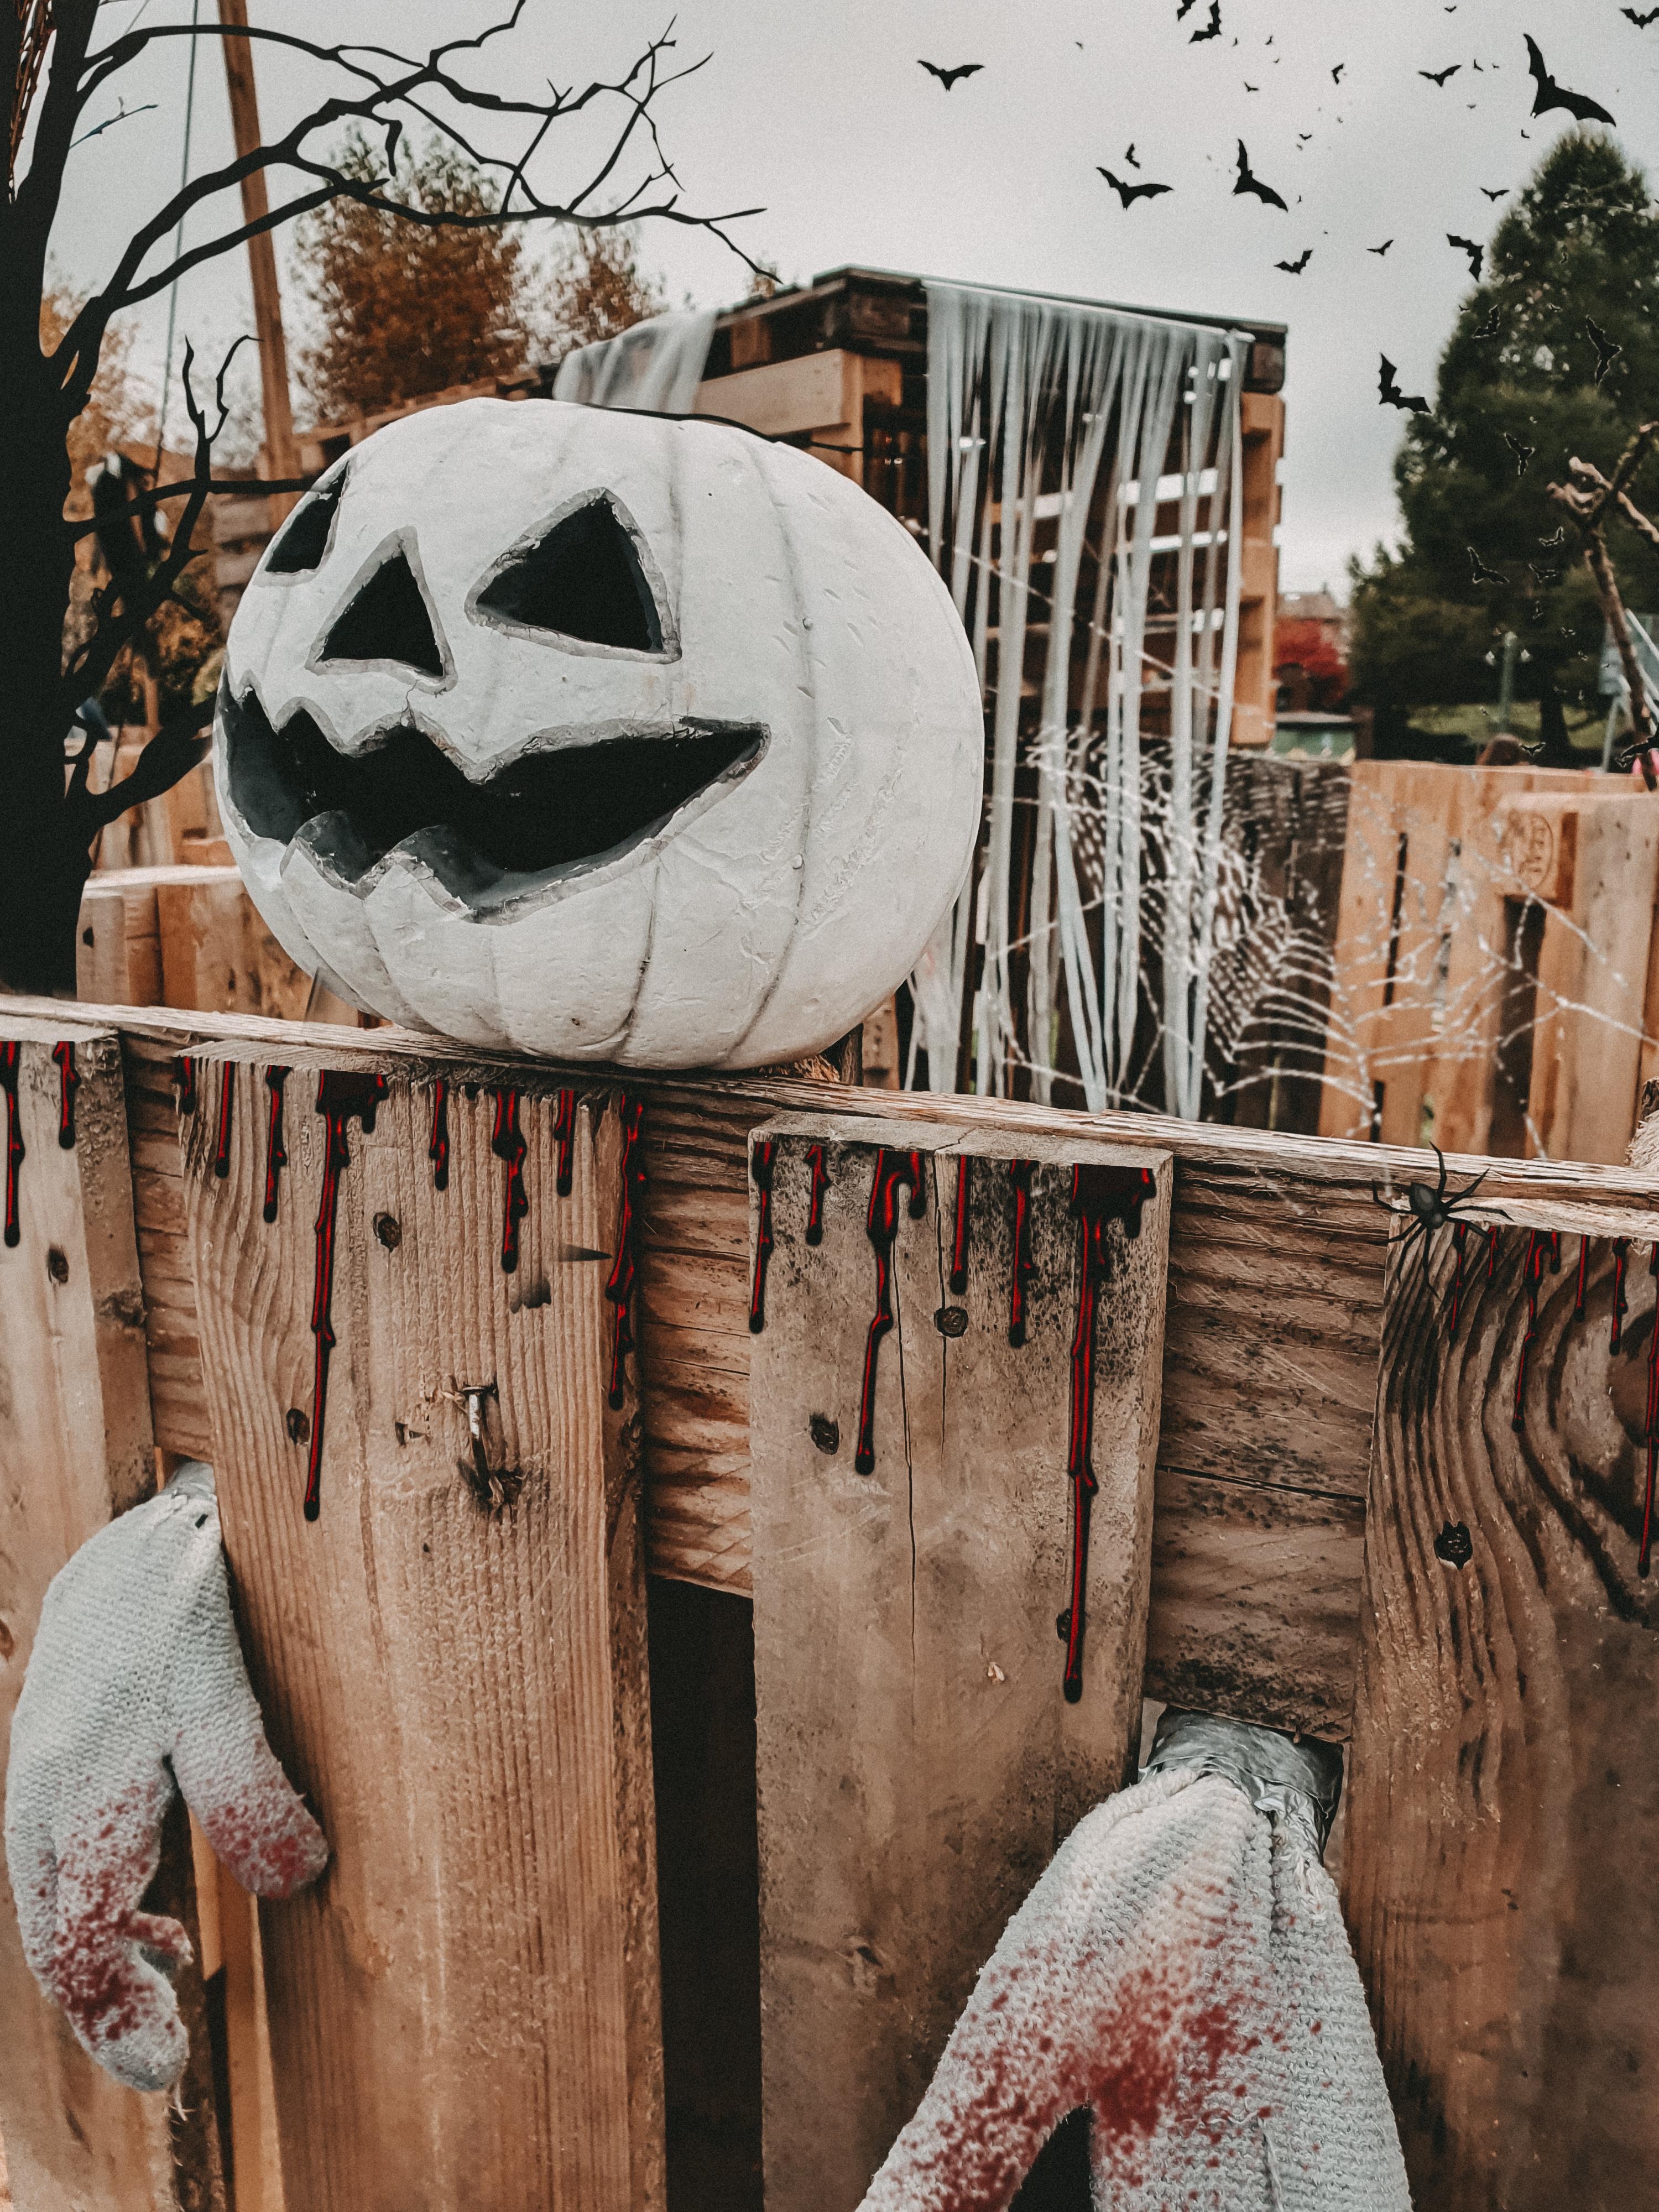 So einfach kann Halloweendeko sein 👻
#diy #halloween #halloweendeko #couchstyle